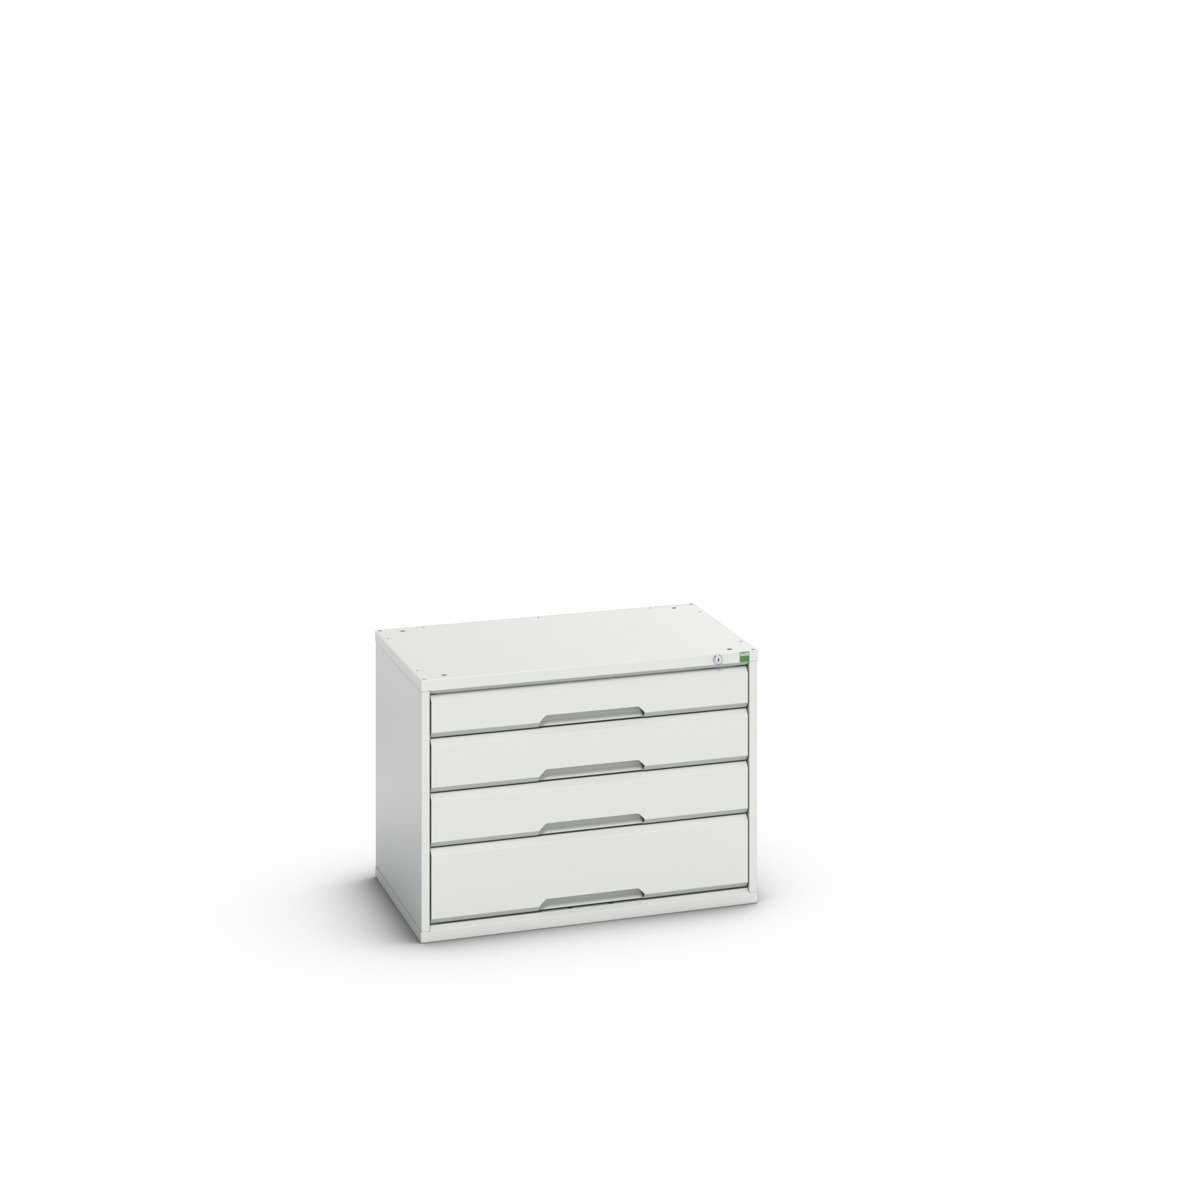 16925104.16 - verso drawer cabinet